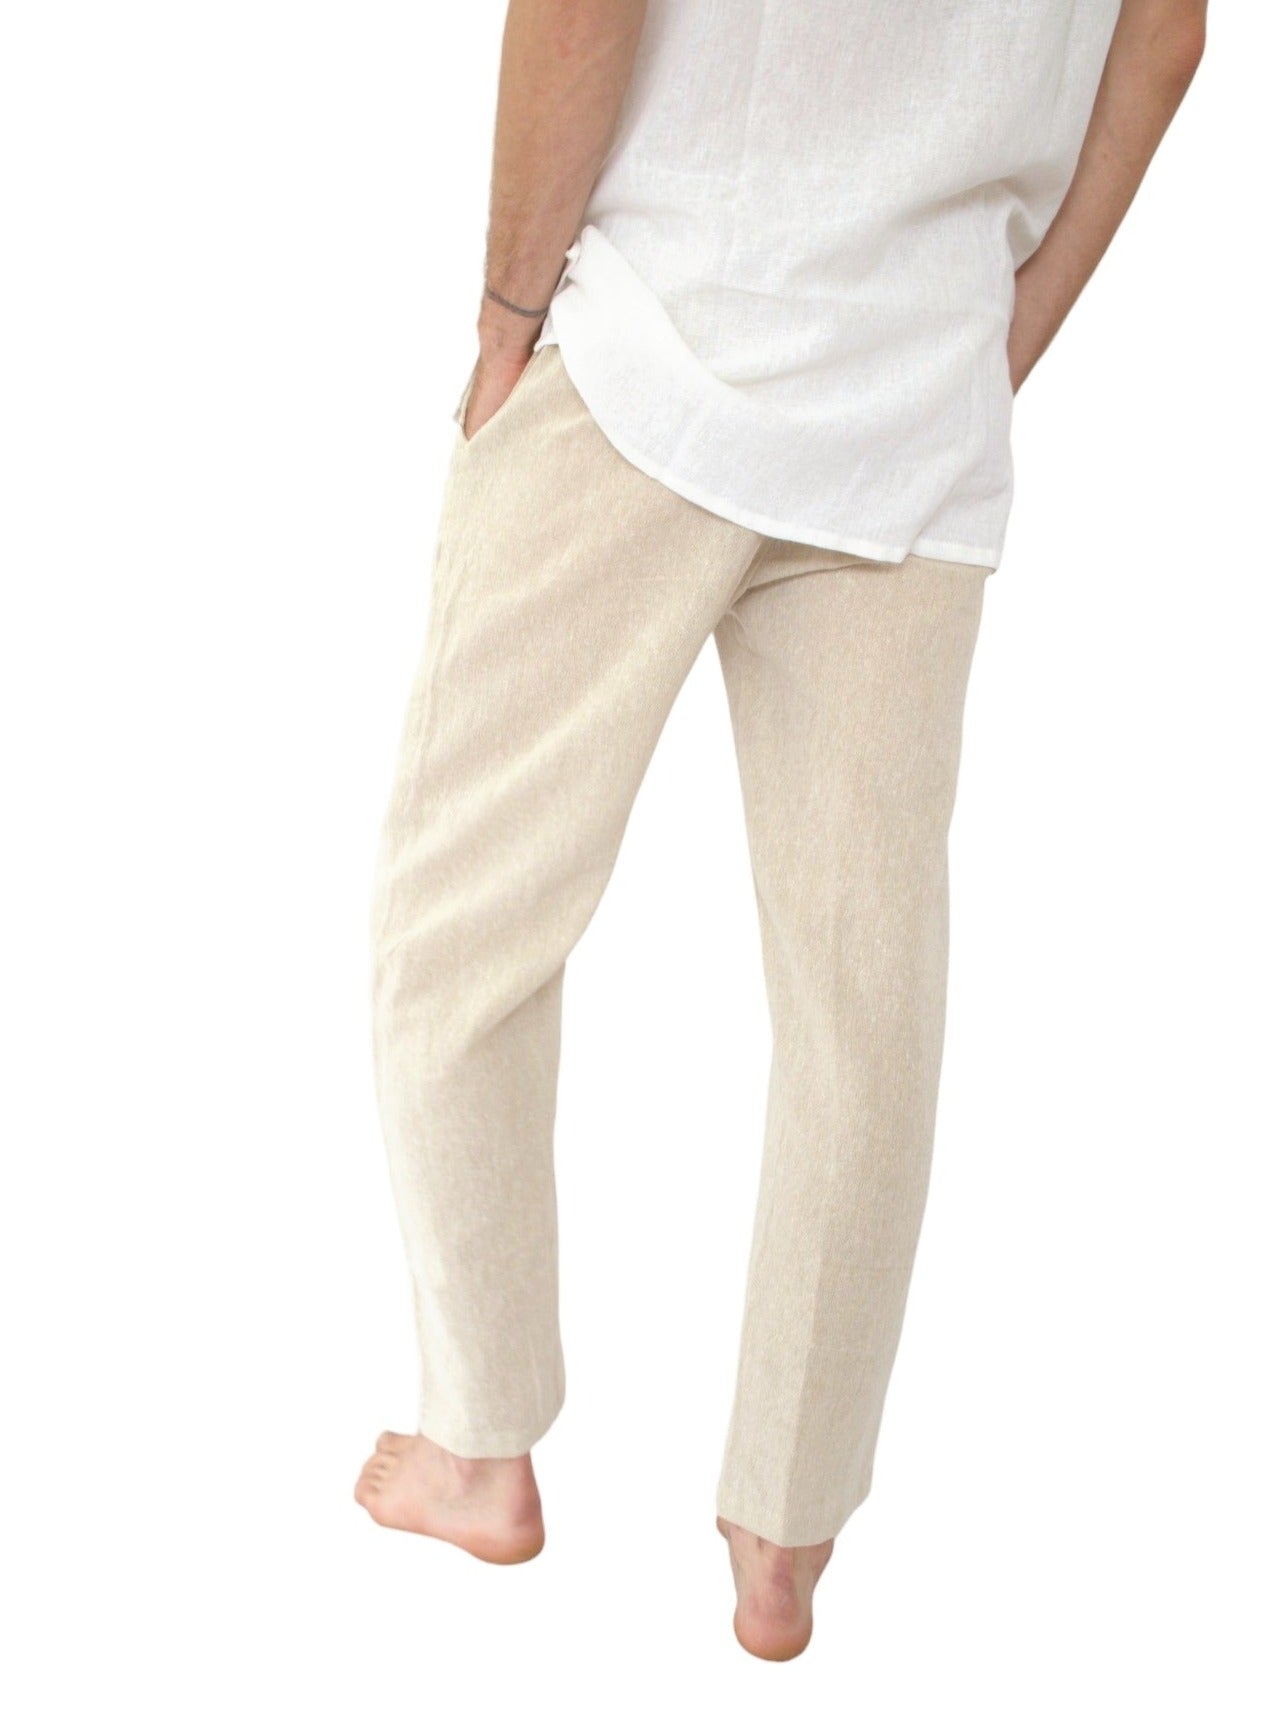 Warm Sand Unisex Organic Cotton Free Size Trousers